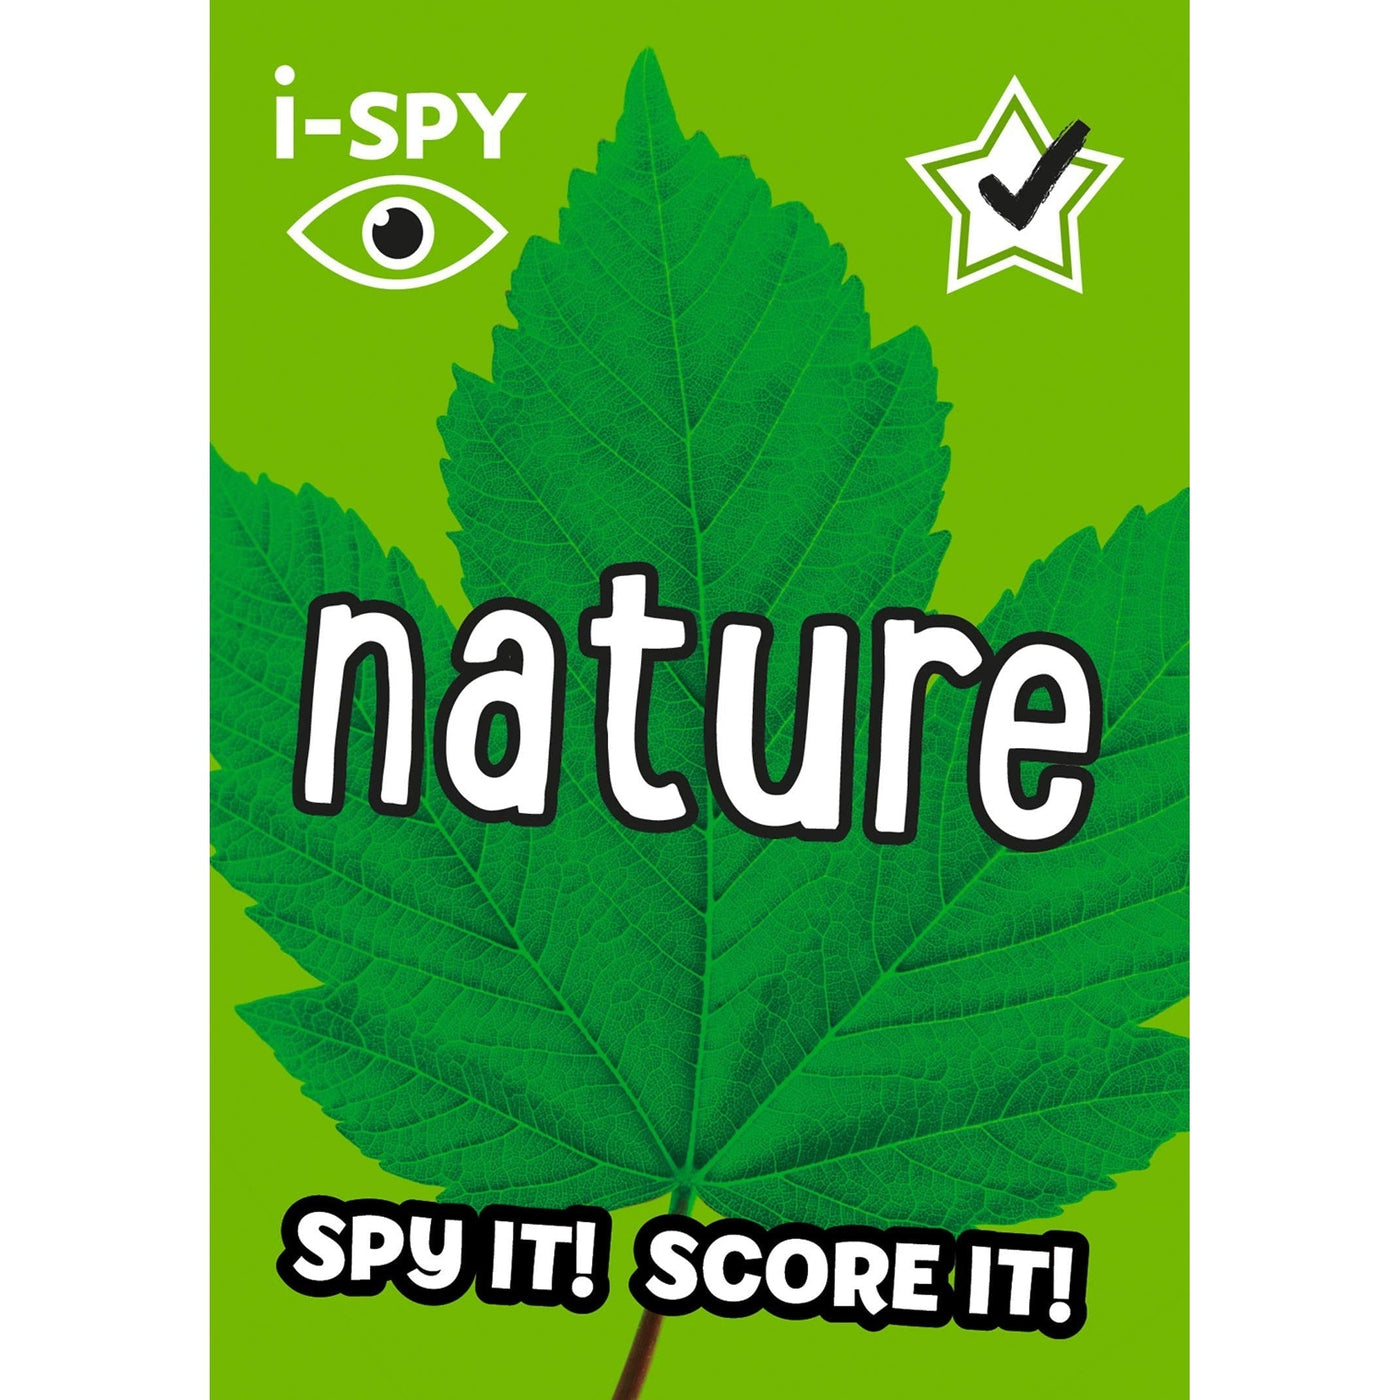 I-Spy Nature: Spy It! Score It! (Collins Michelin I-Spy Guides)